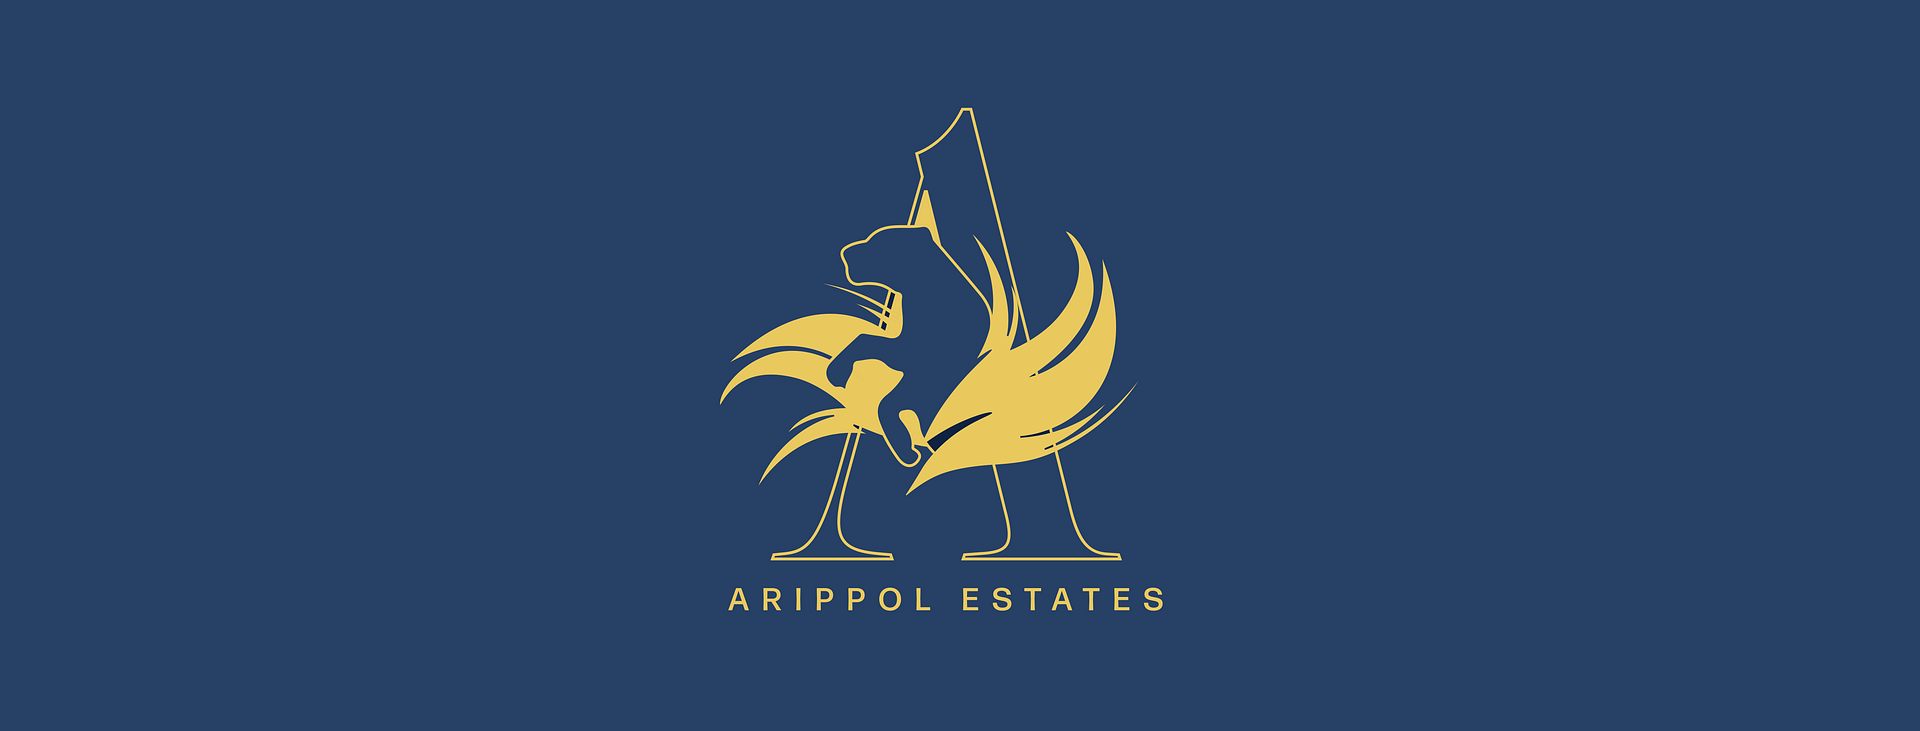 Arippol Estates: Company Logo.